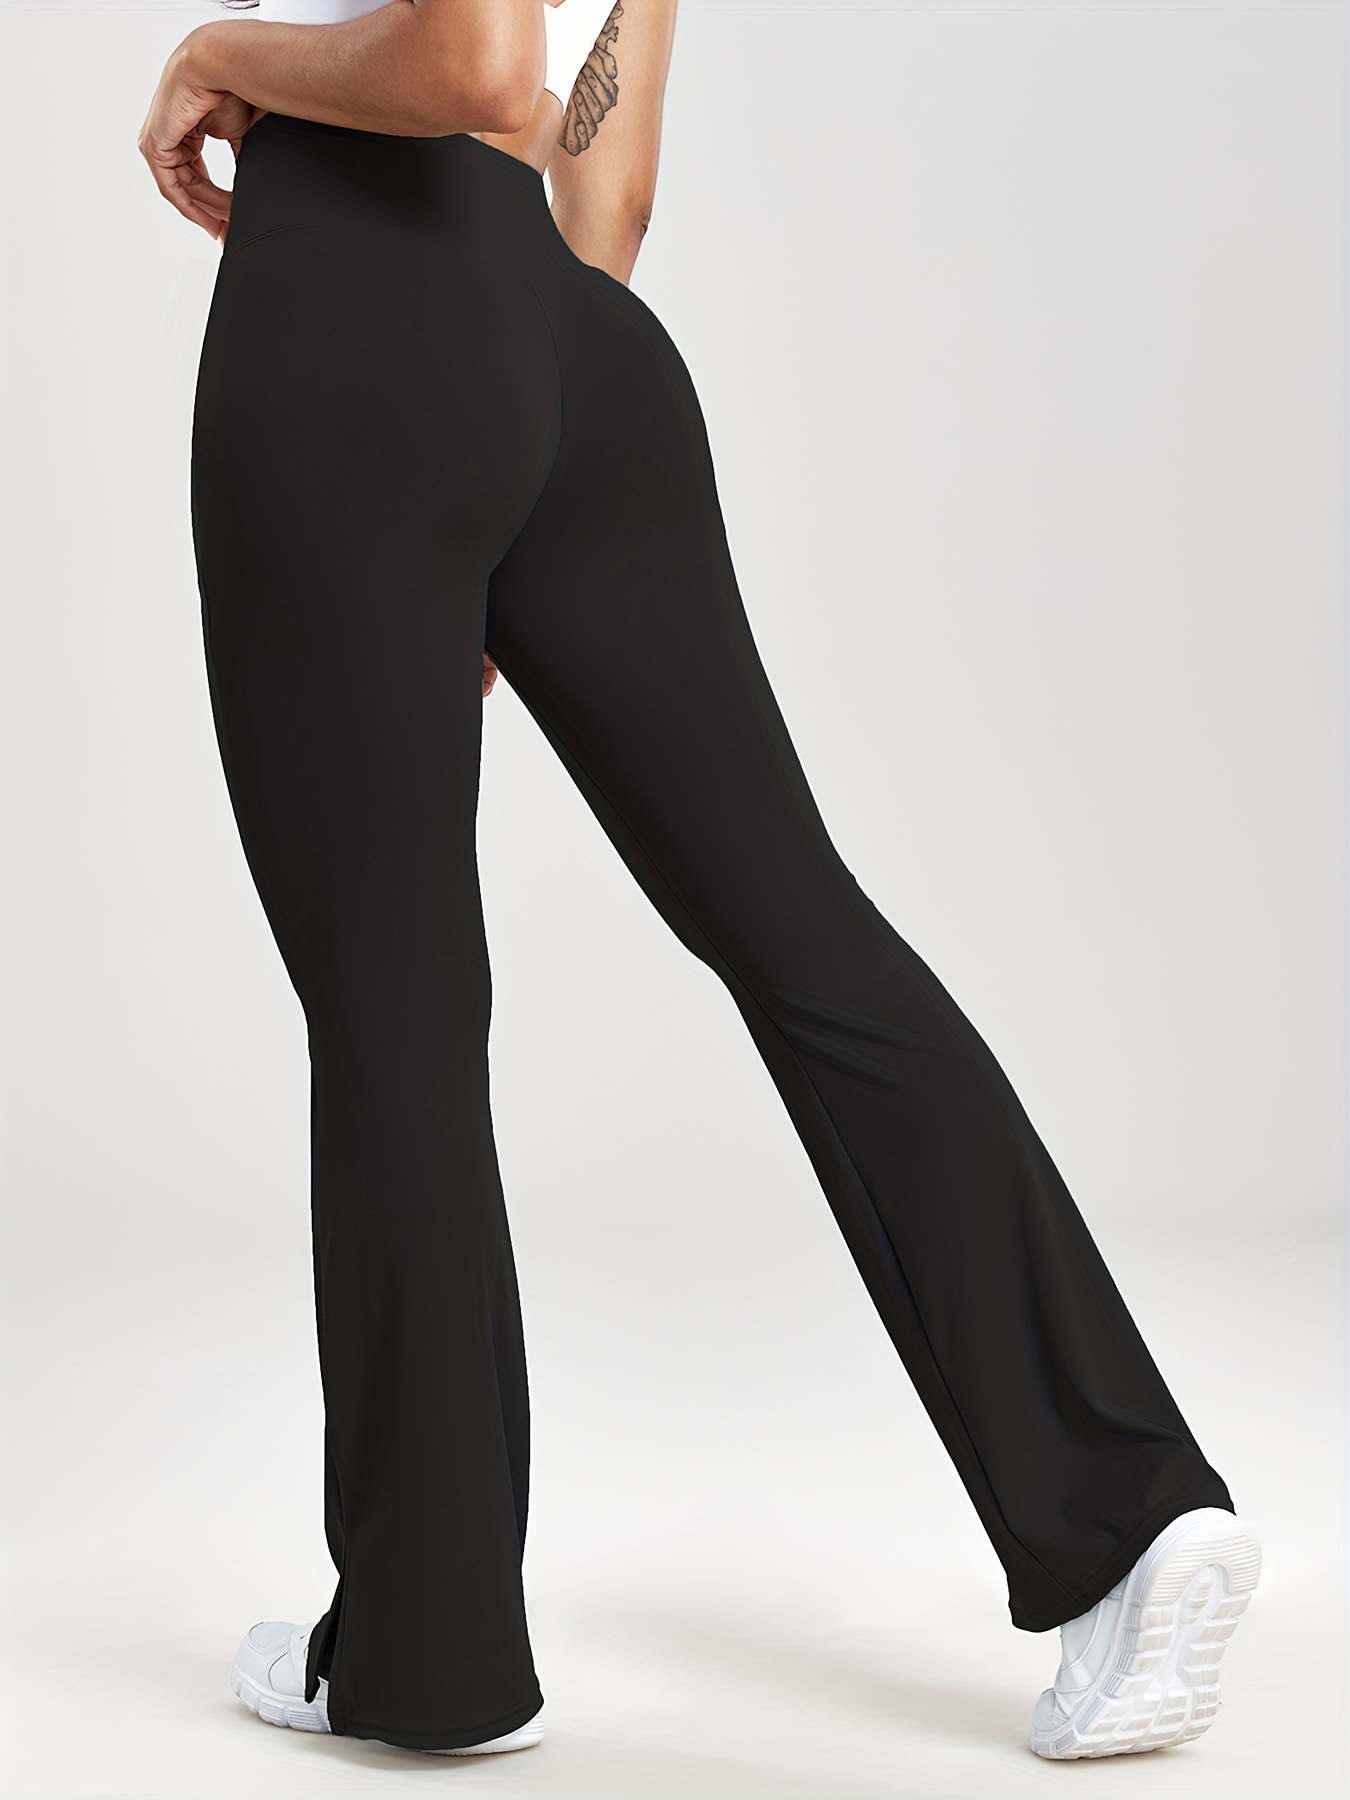  Pants for Women V Waist Flare Leg Pants (Color : Black